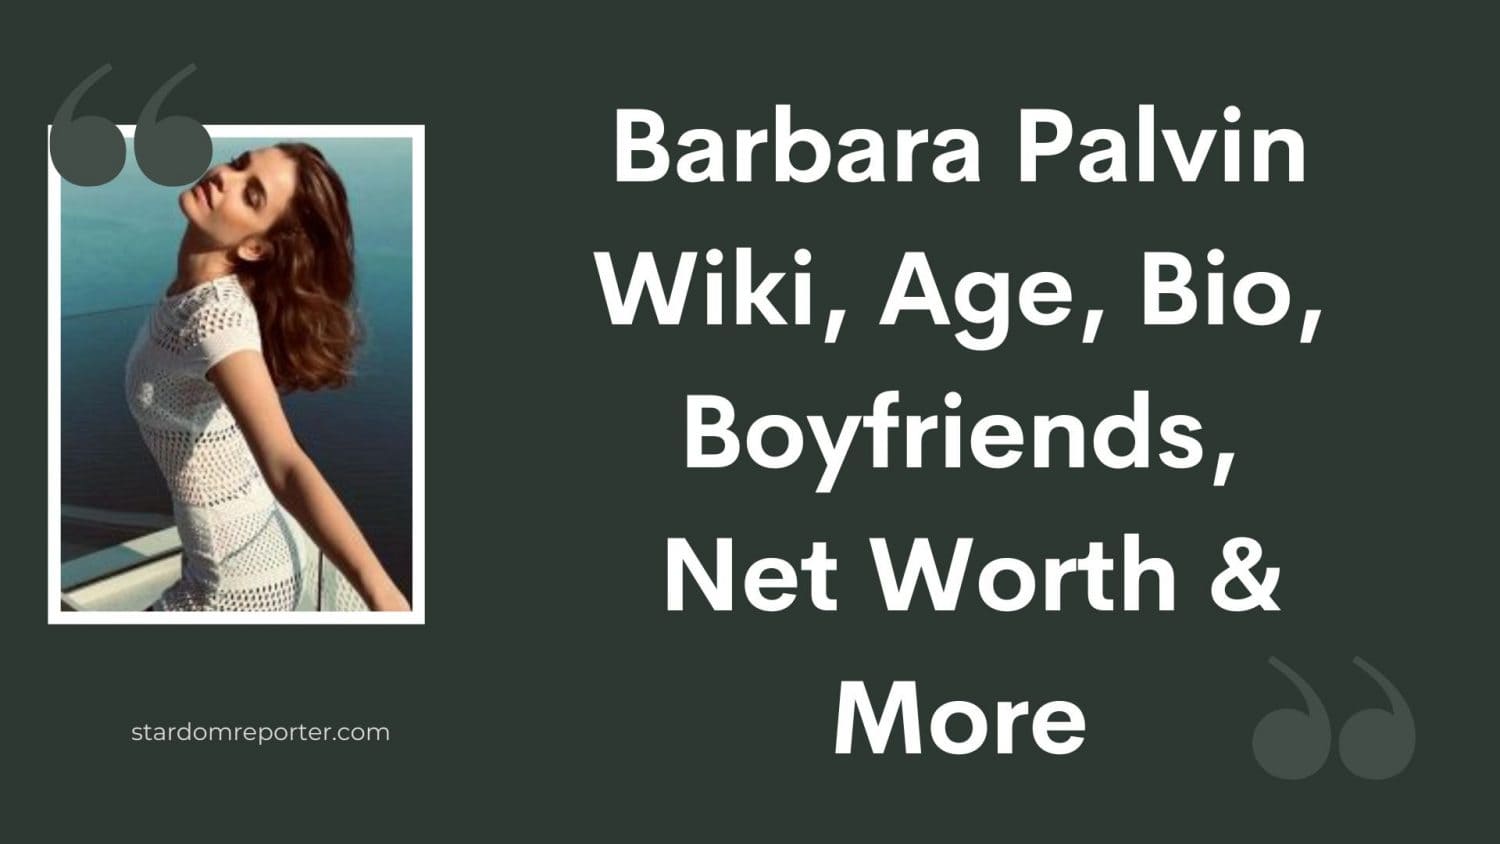 Barbara Palvin Wiki, Age, Bio, Boyfriends, Net Worth & More - 19